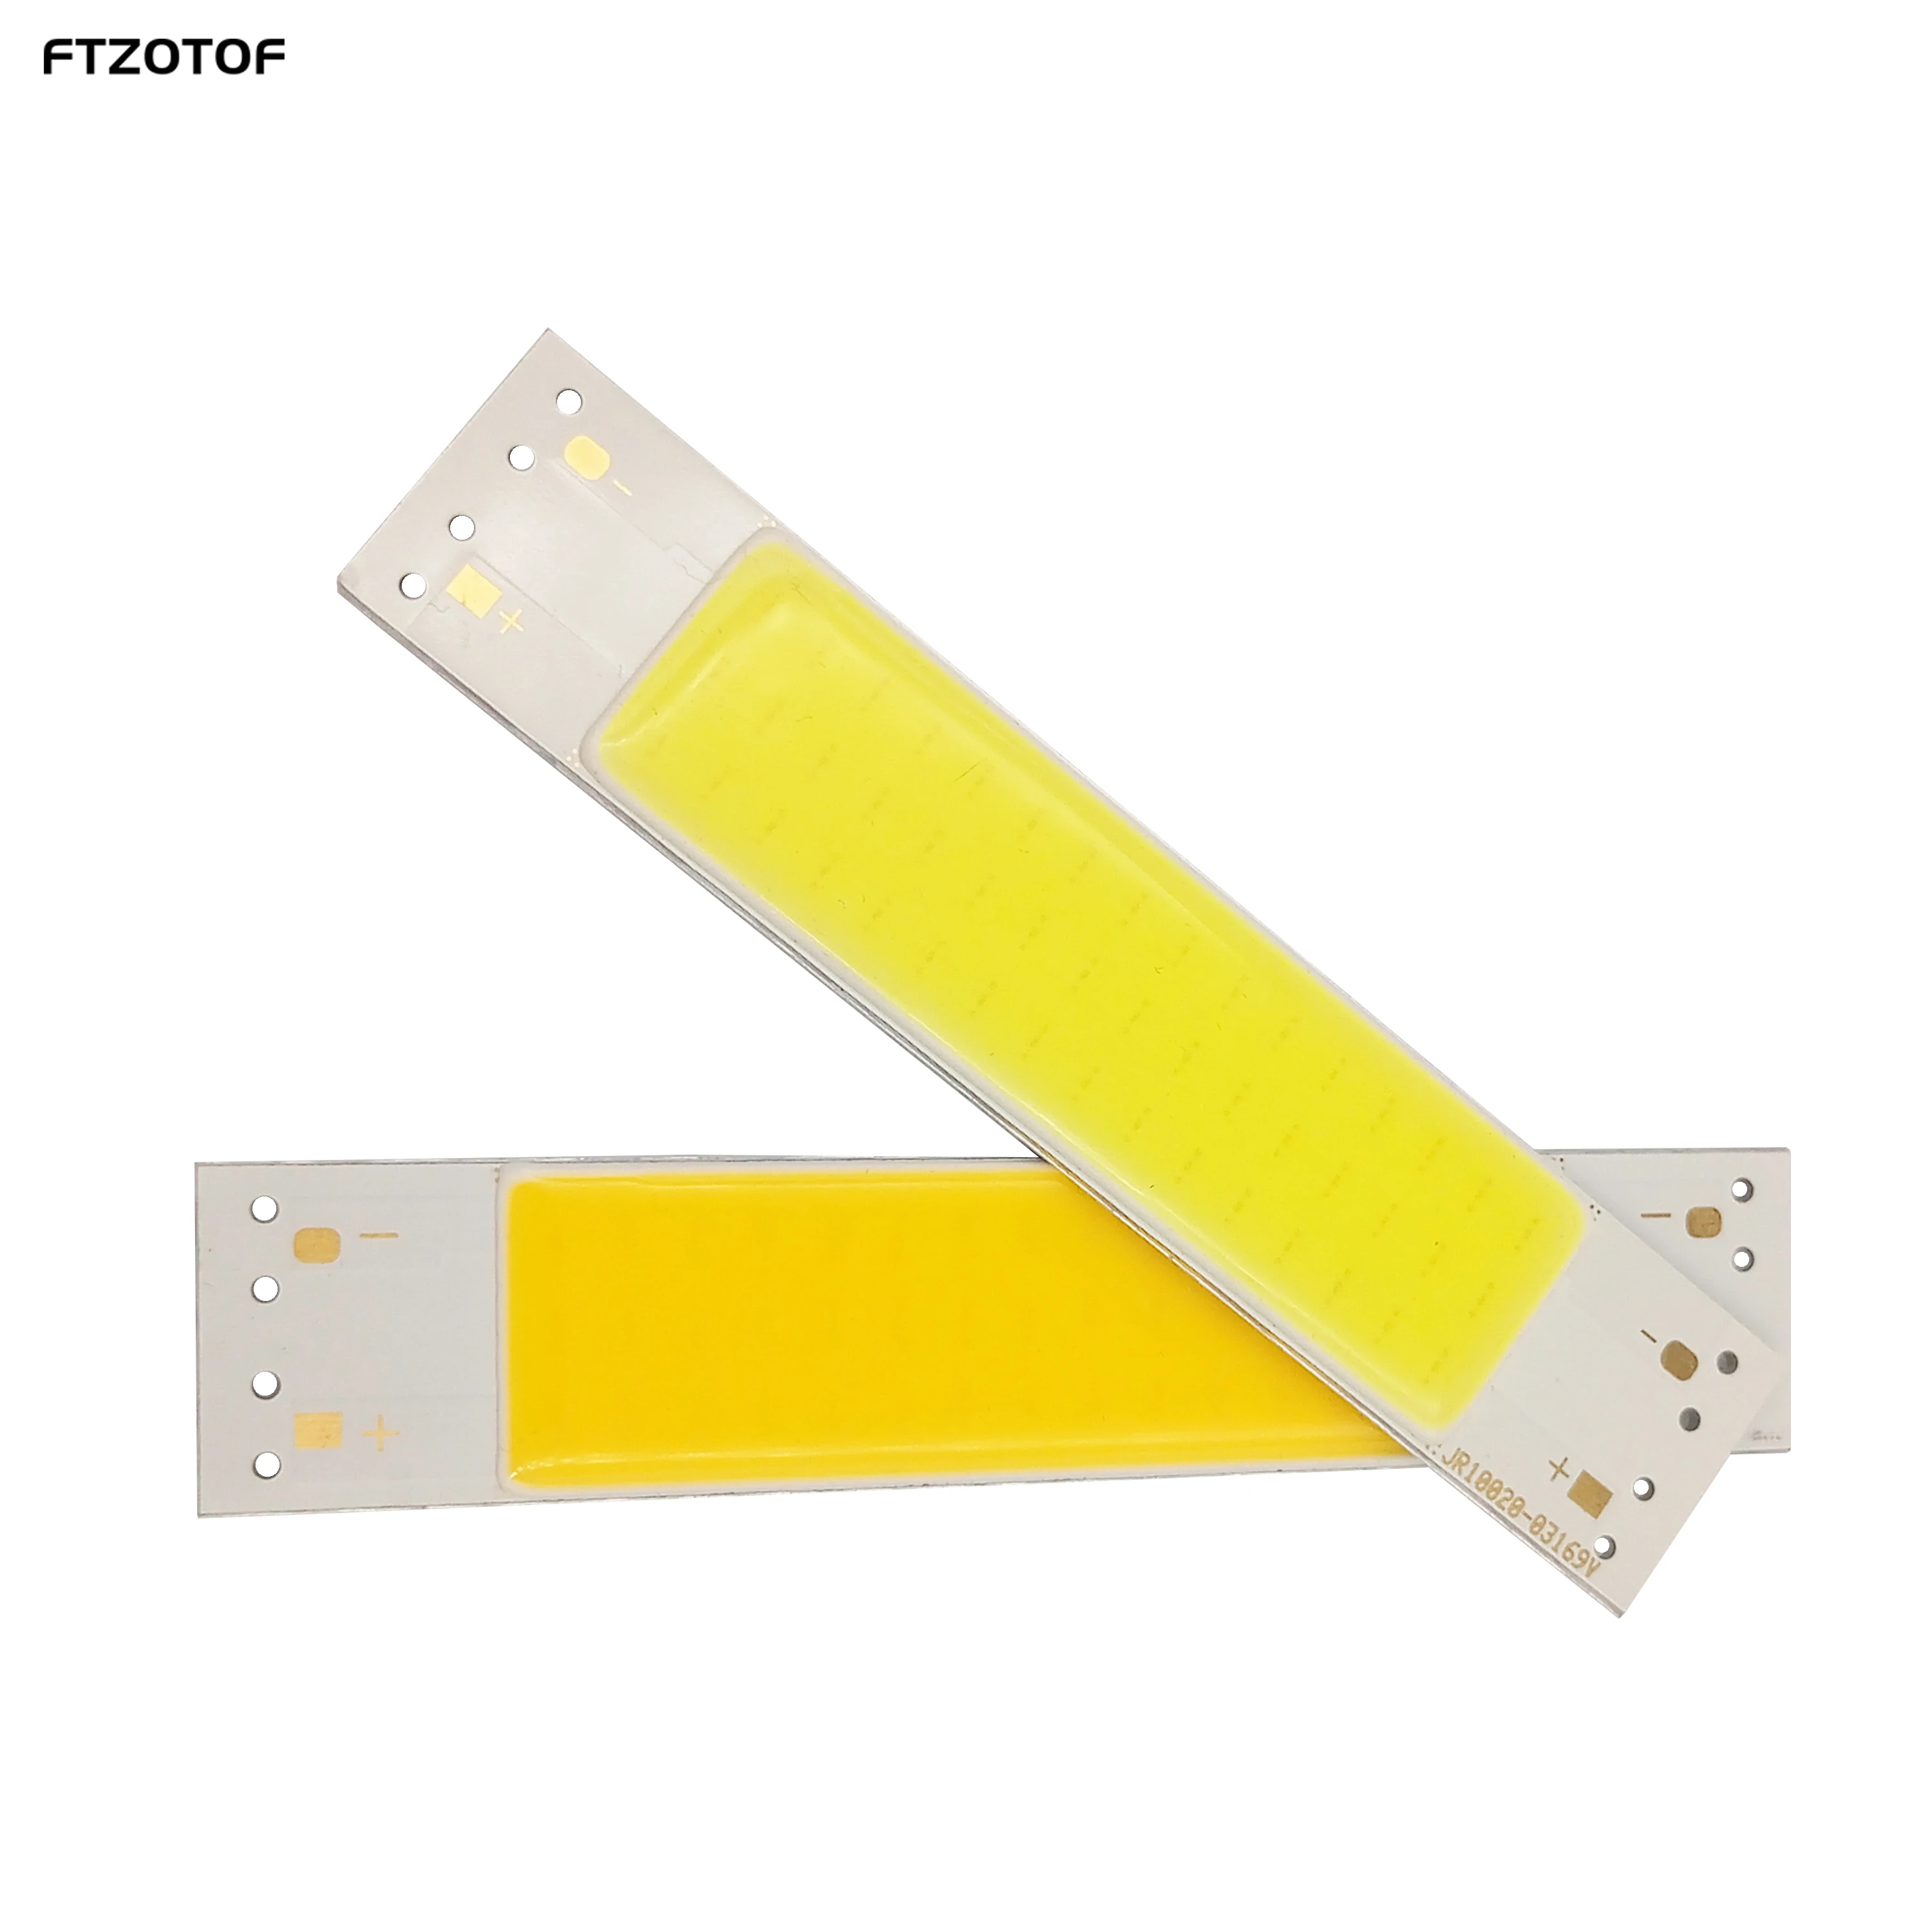 

FTZOTOF COB LED Light Bar Downlight 100x20mm 9V 3W Warm Cold White RGB Waterproof Chip Strip Bulbs Dot Matrix Built-in Lamps